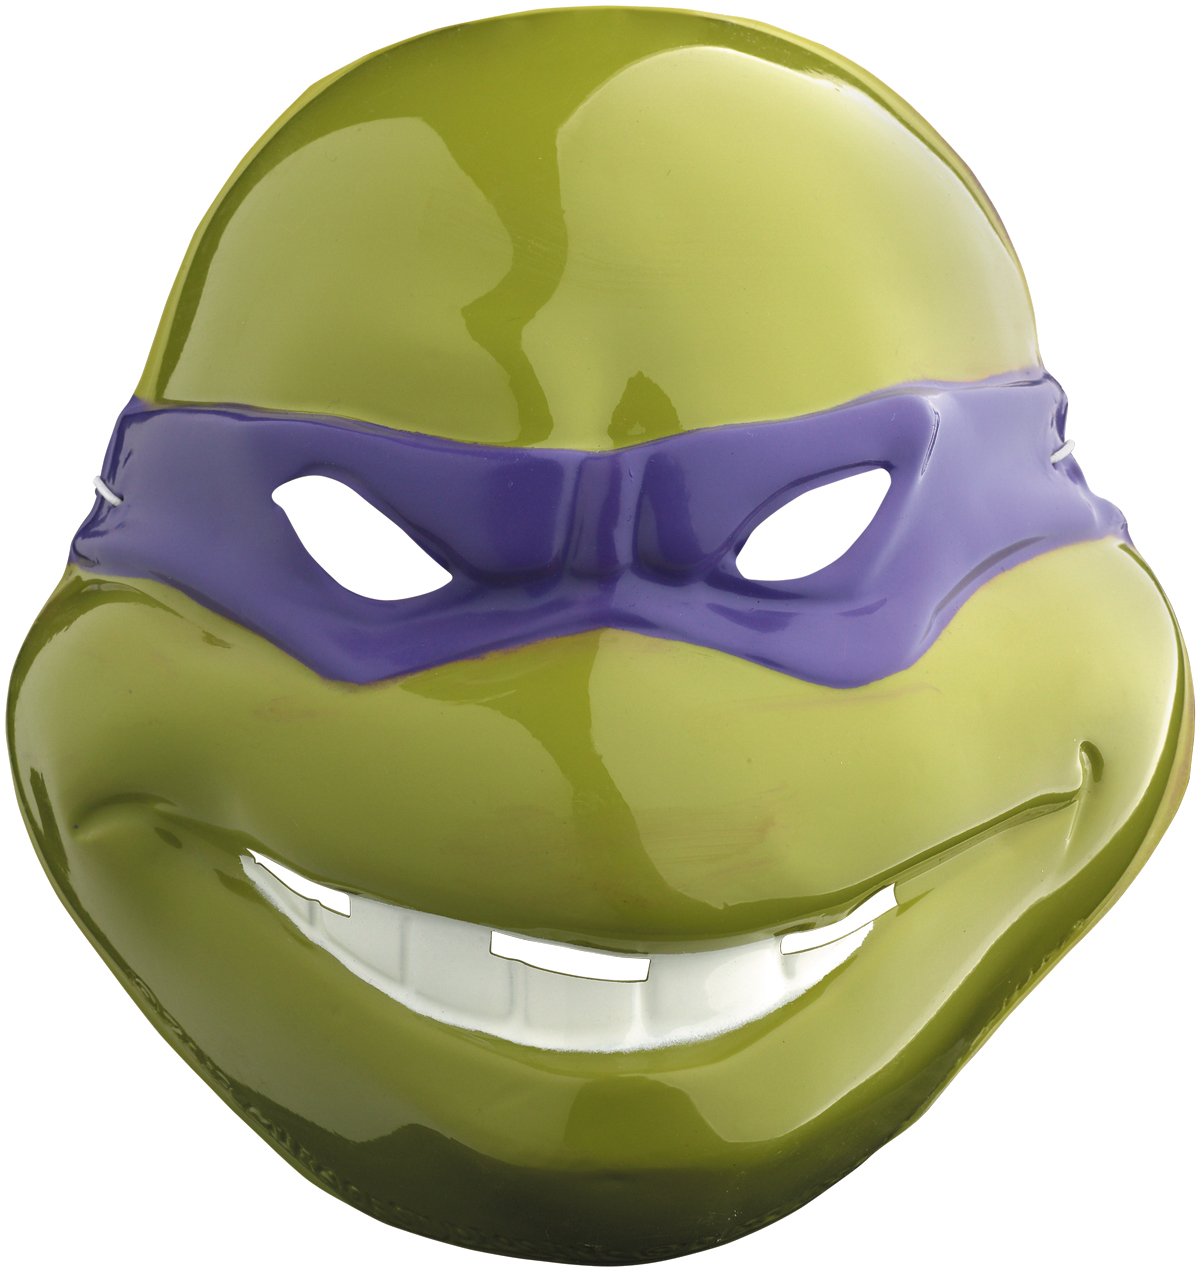 TMNT - Donatello Vacuform Mask (Adult)